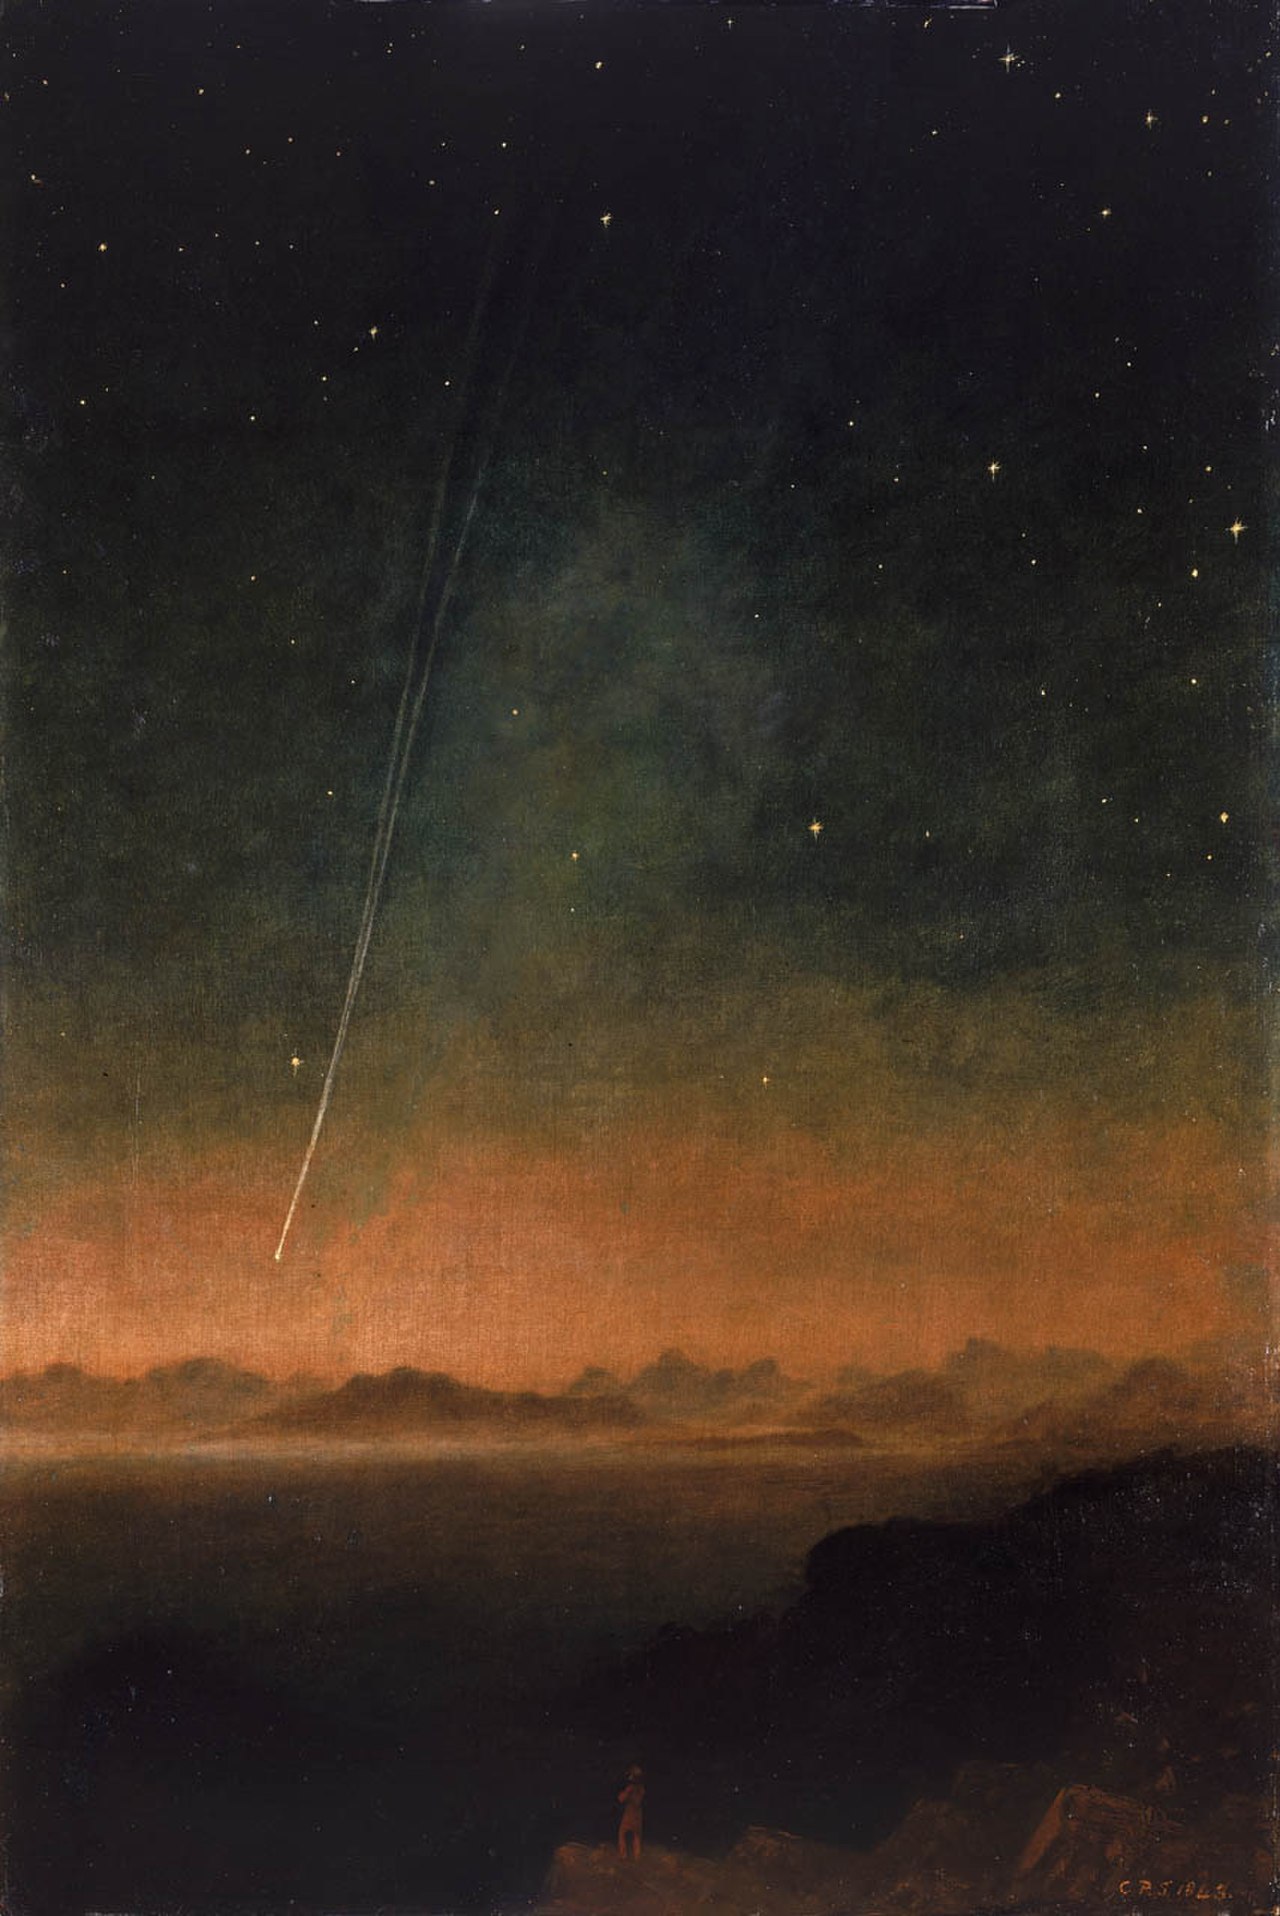 1843 års stora komet by Charles Piazzi Smyth - 1843 - 105.2 x 75.3 cm 